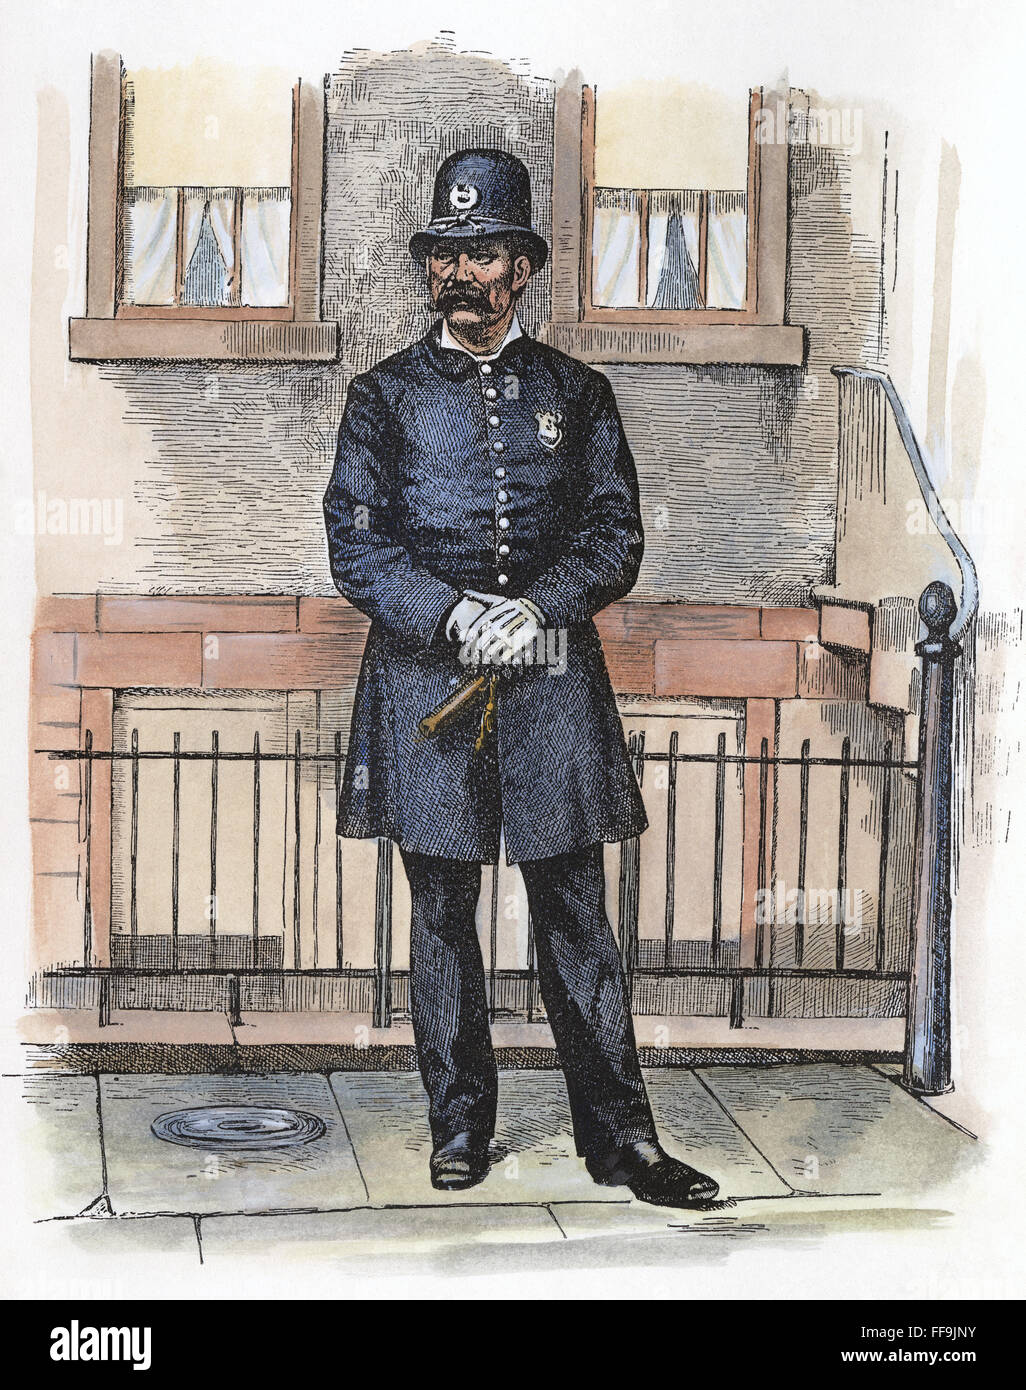 POLICEMAN, c1885. /nA New York policeman. Line engraving c1885. Stock Photo